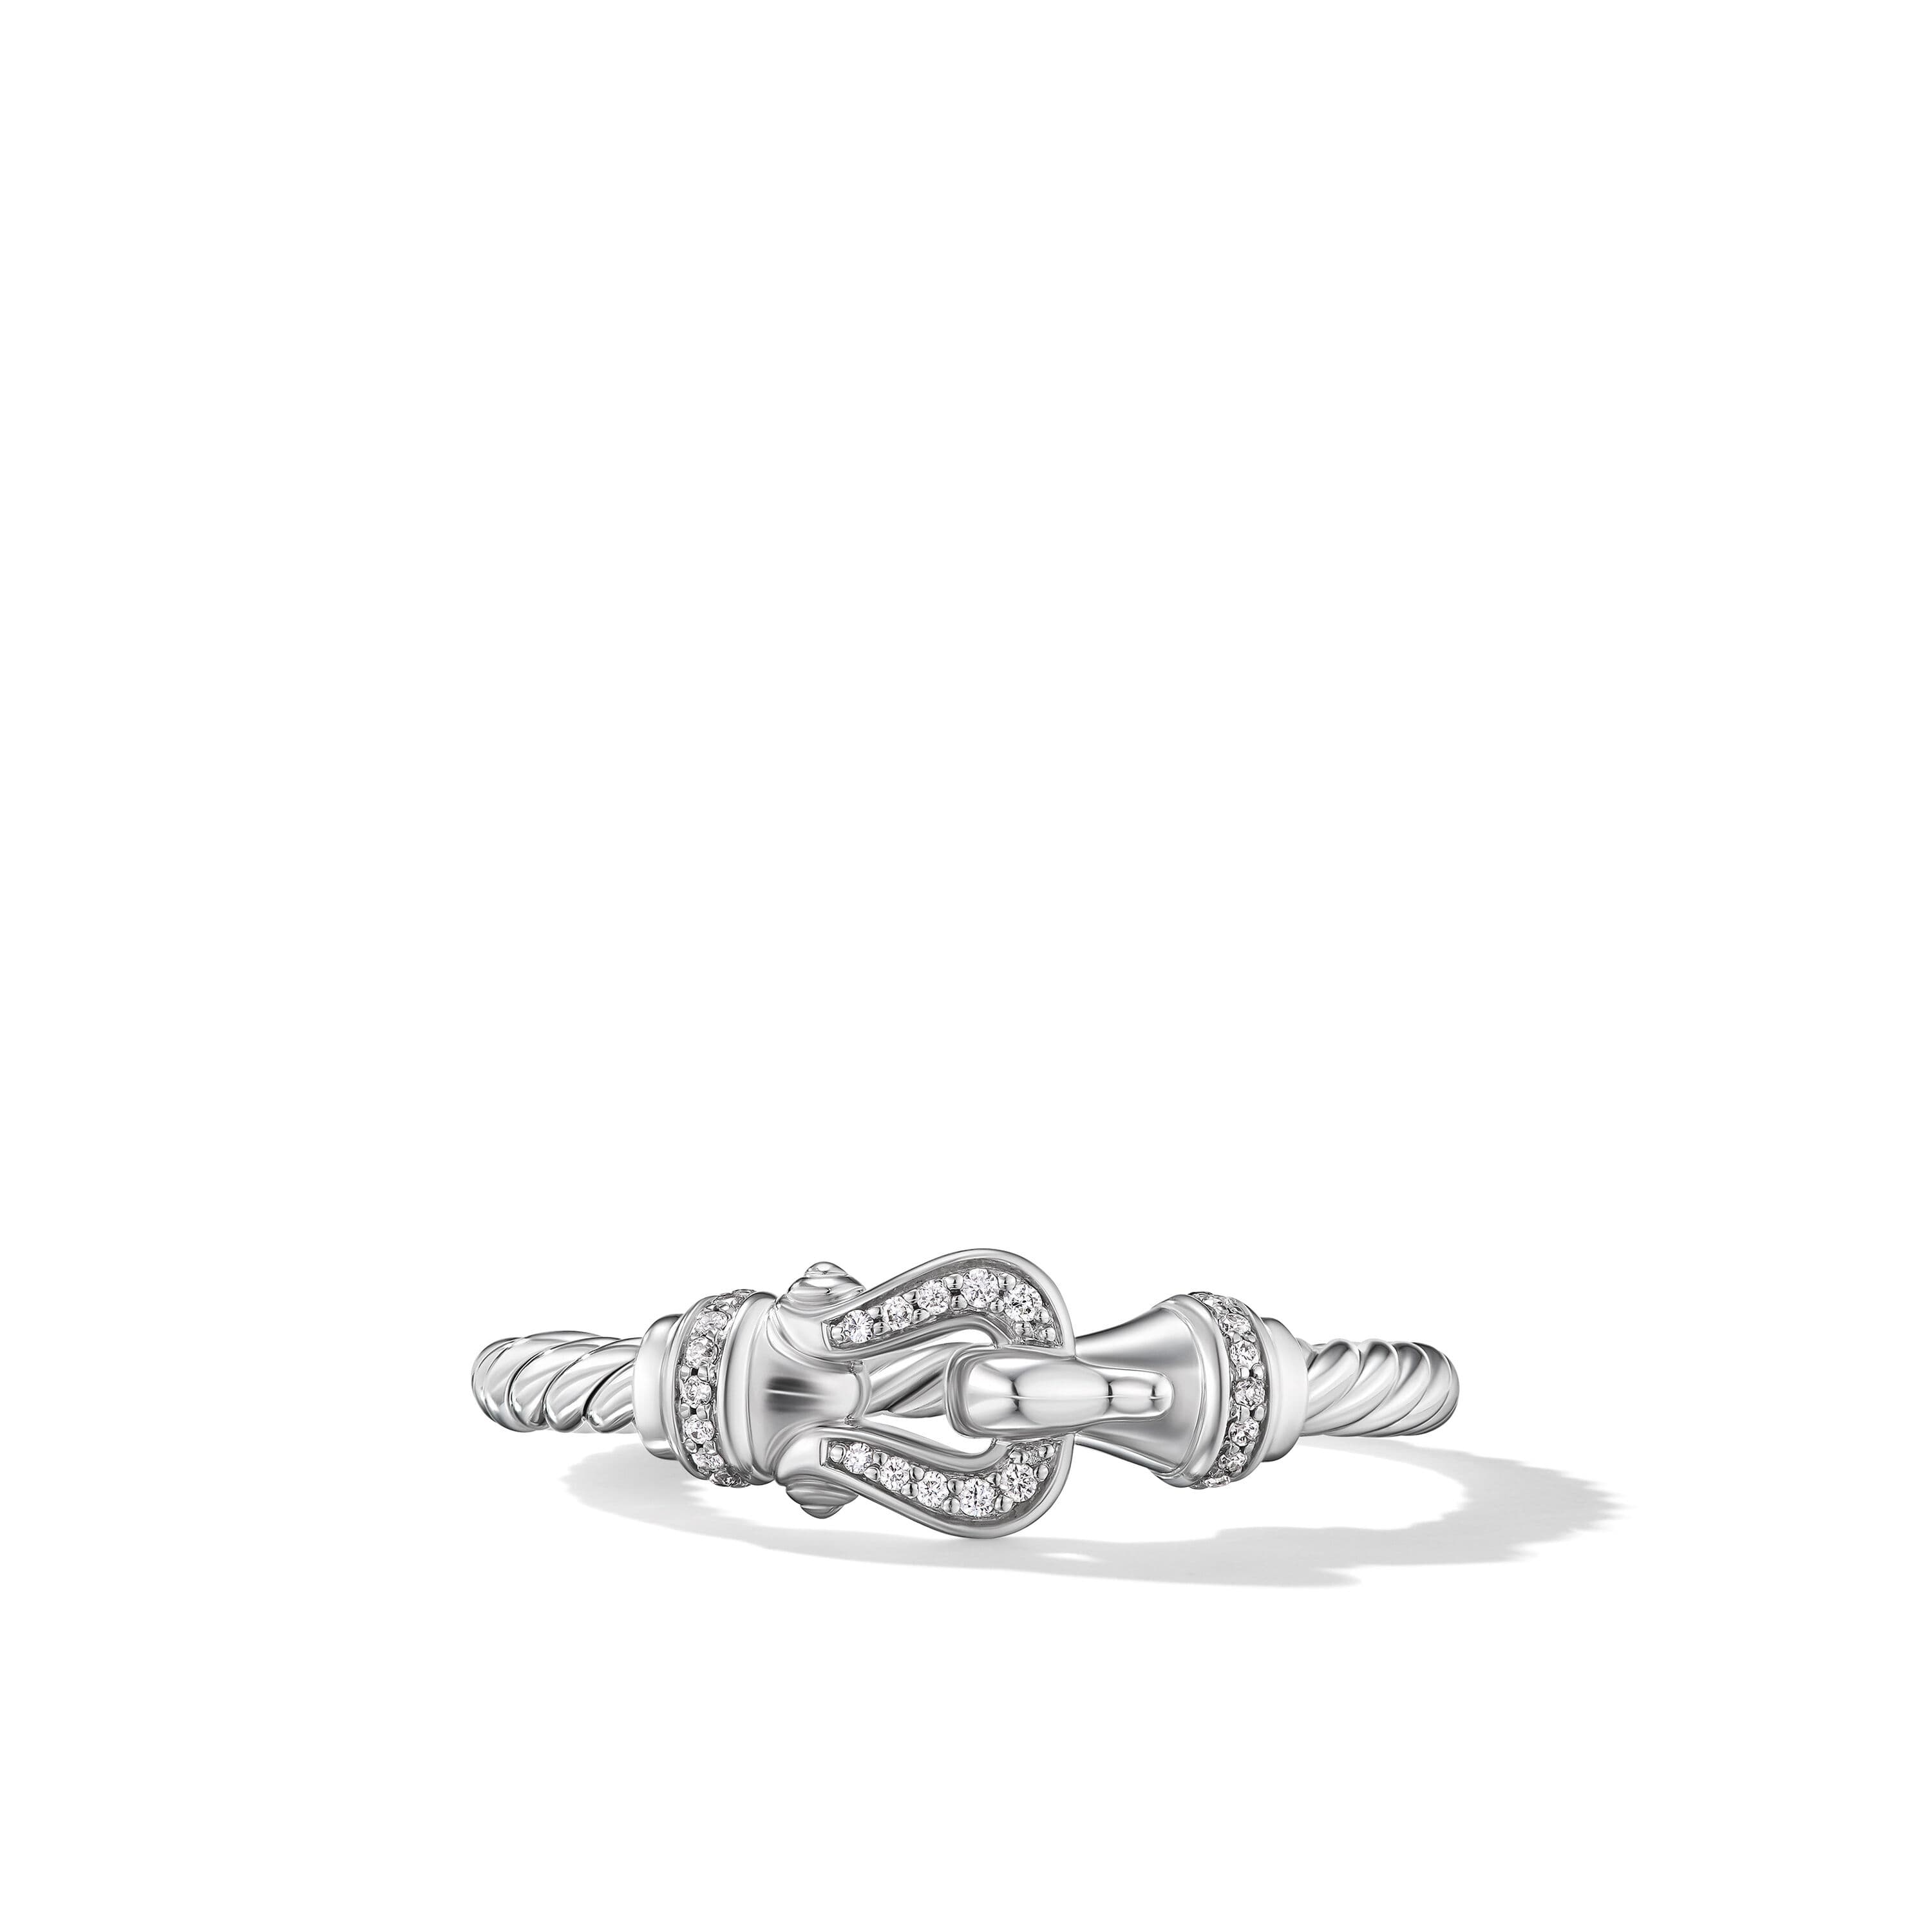 David Yurman Sterling Silver Petite Buckle Ring with Diamonds, Size 6 2